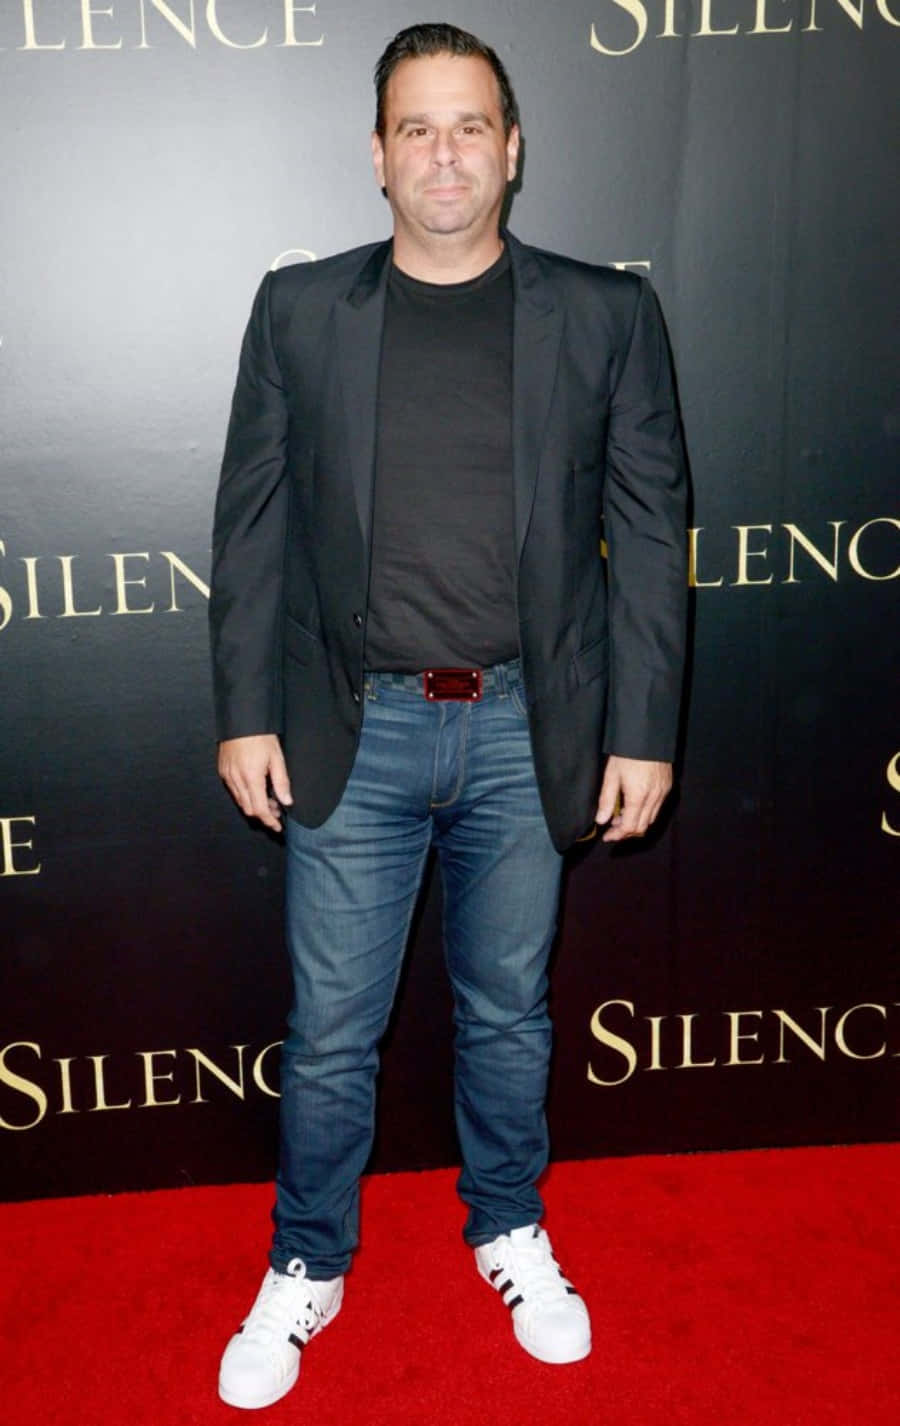 En mand i jeans og jakke står på et rødt gulv.